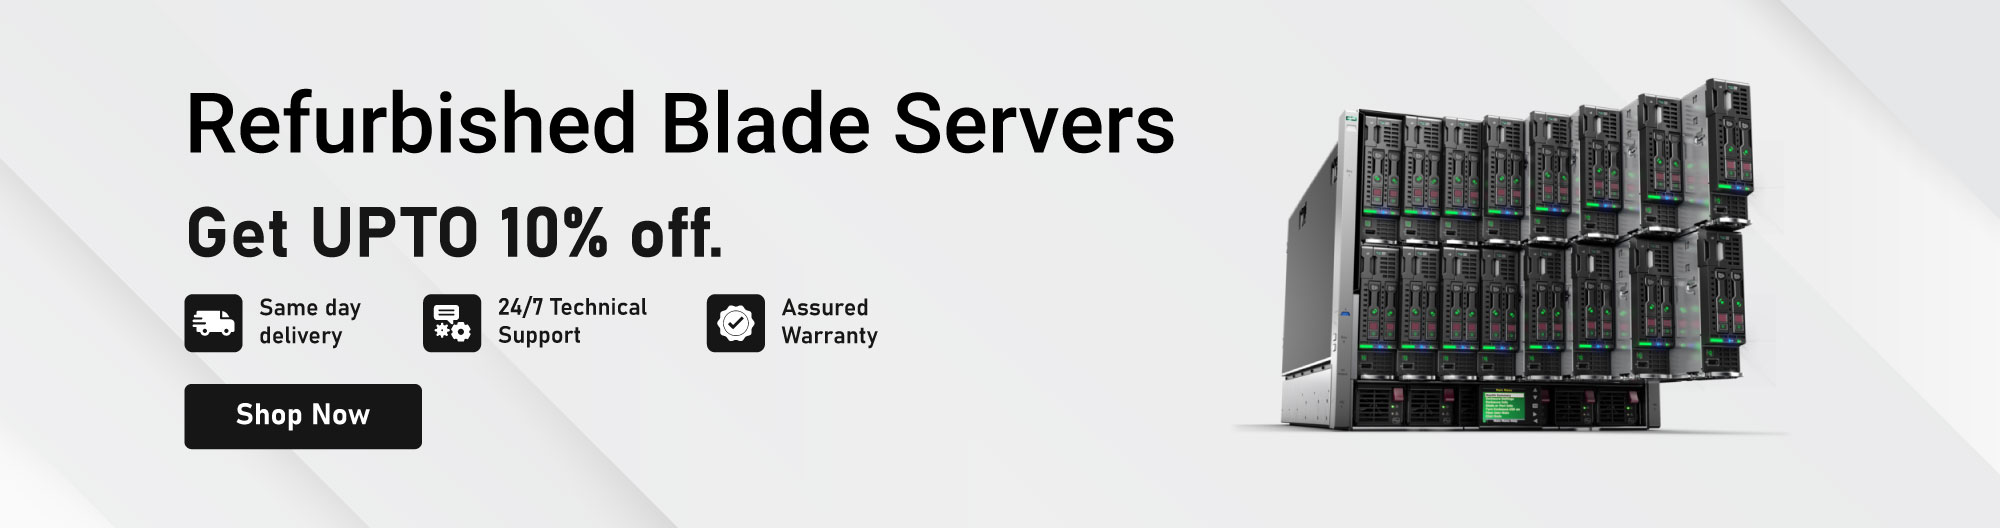 Refurbished Blade Servers